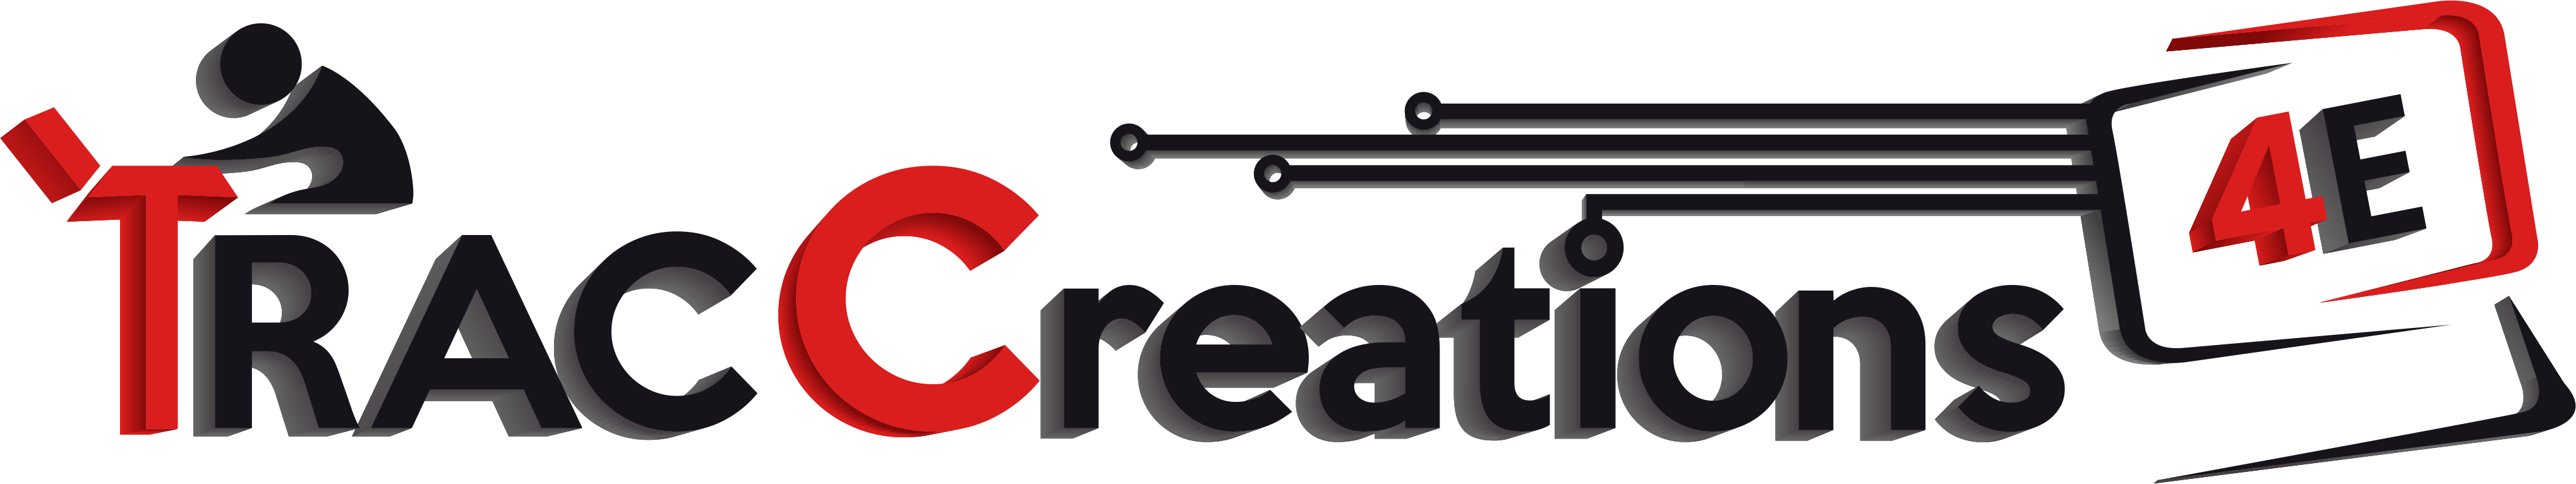 TRACCreations4E Logo